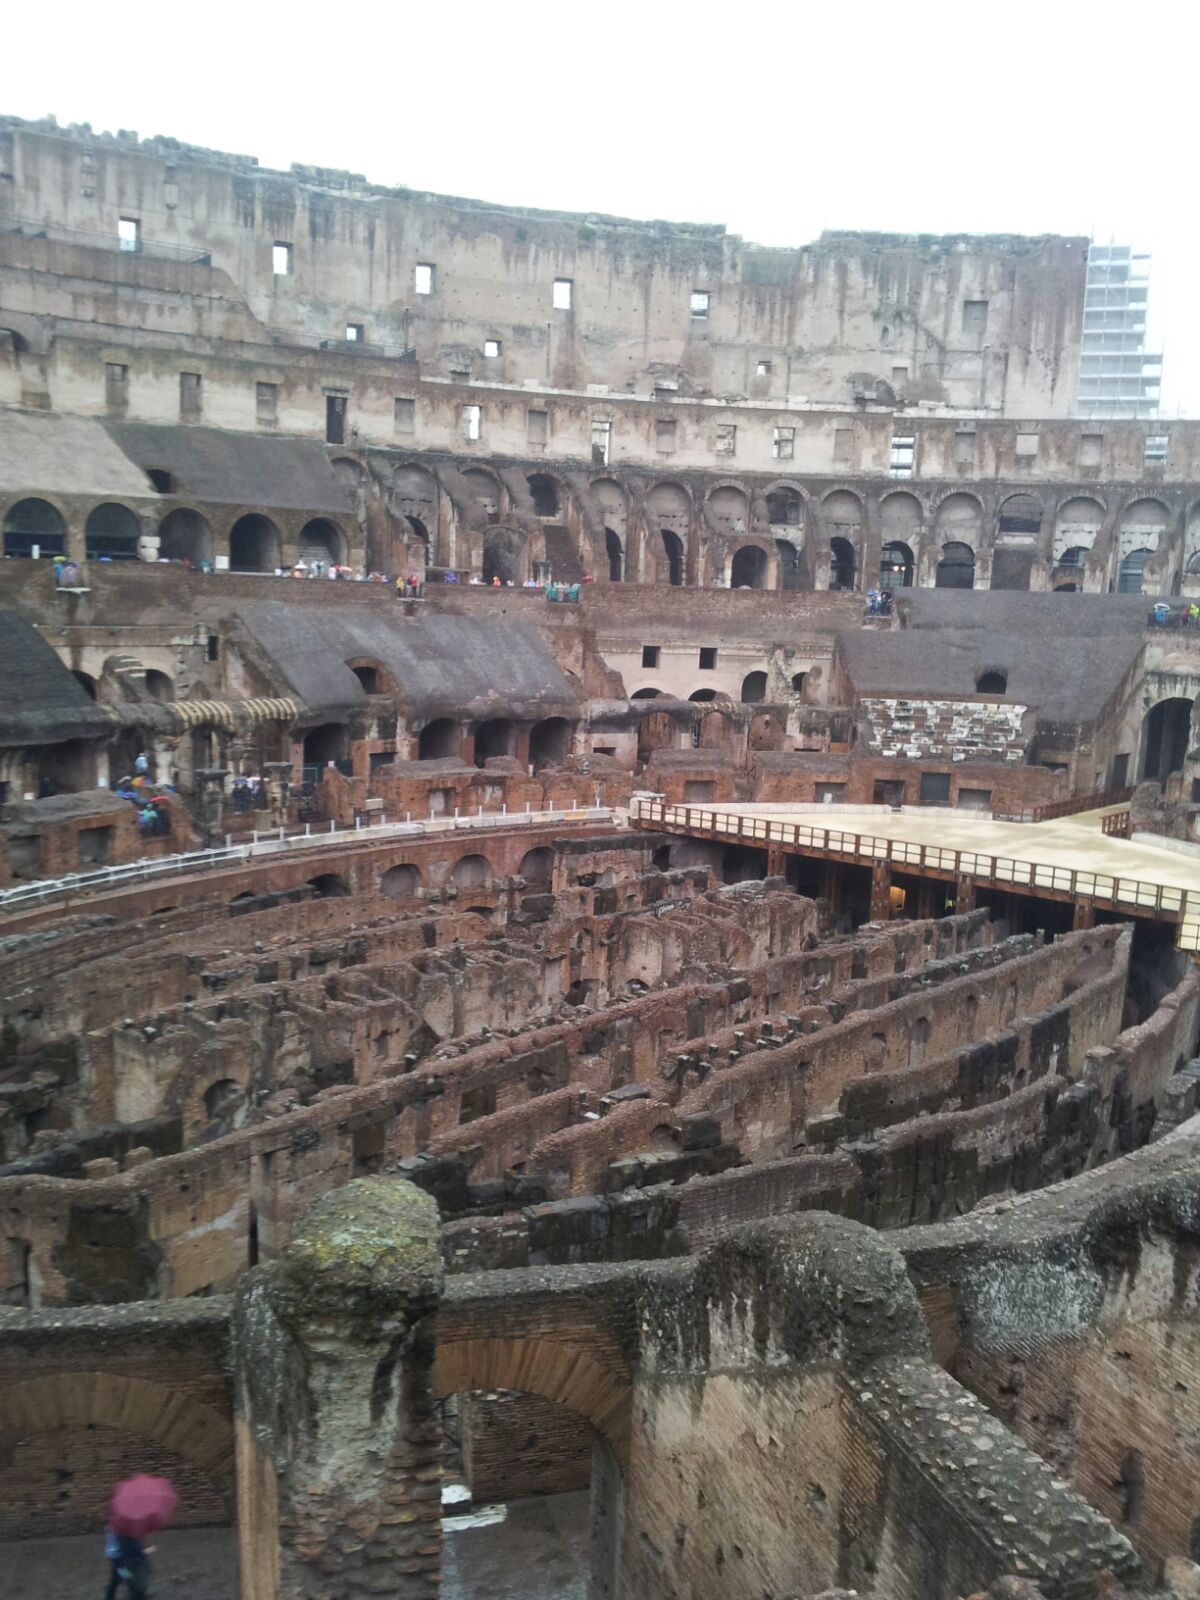 The underground area of the Colosseum, the hypogeum